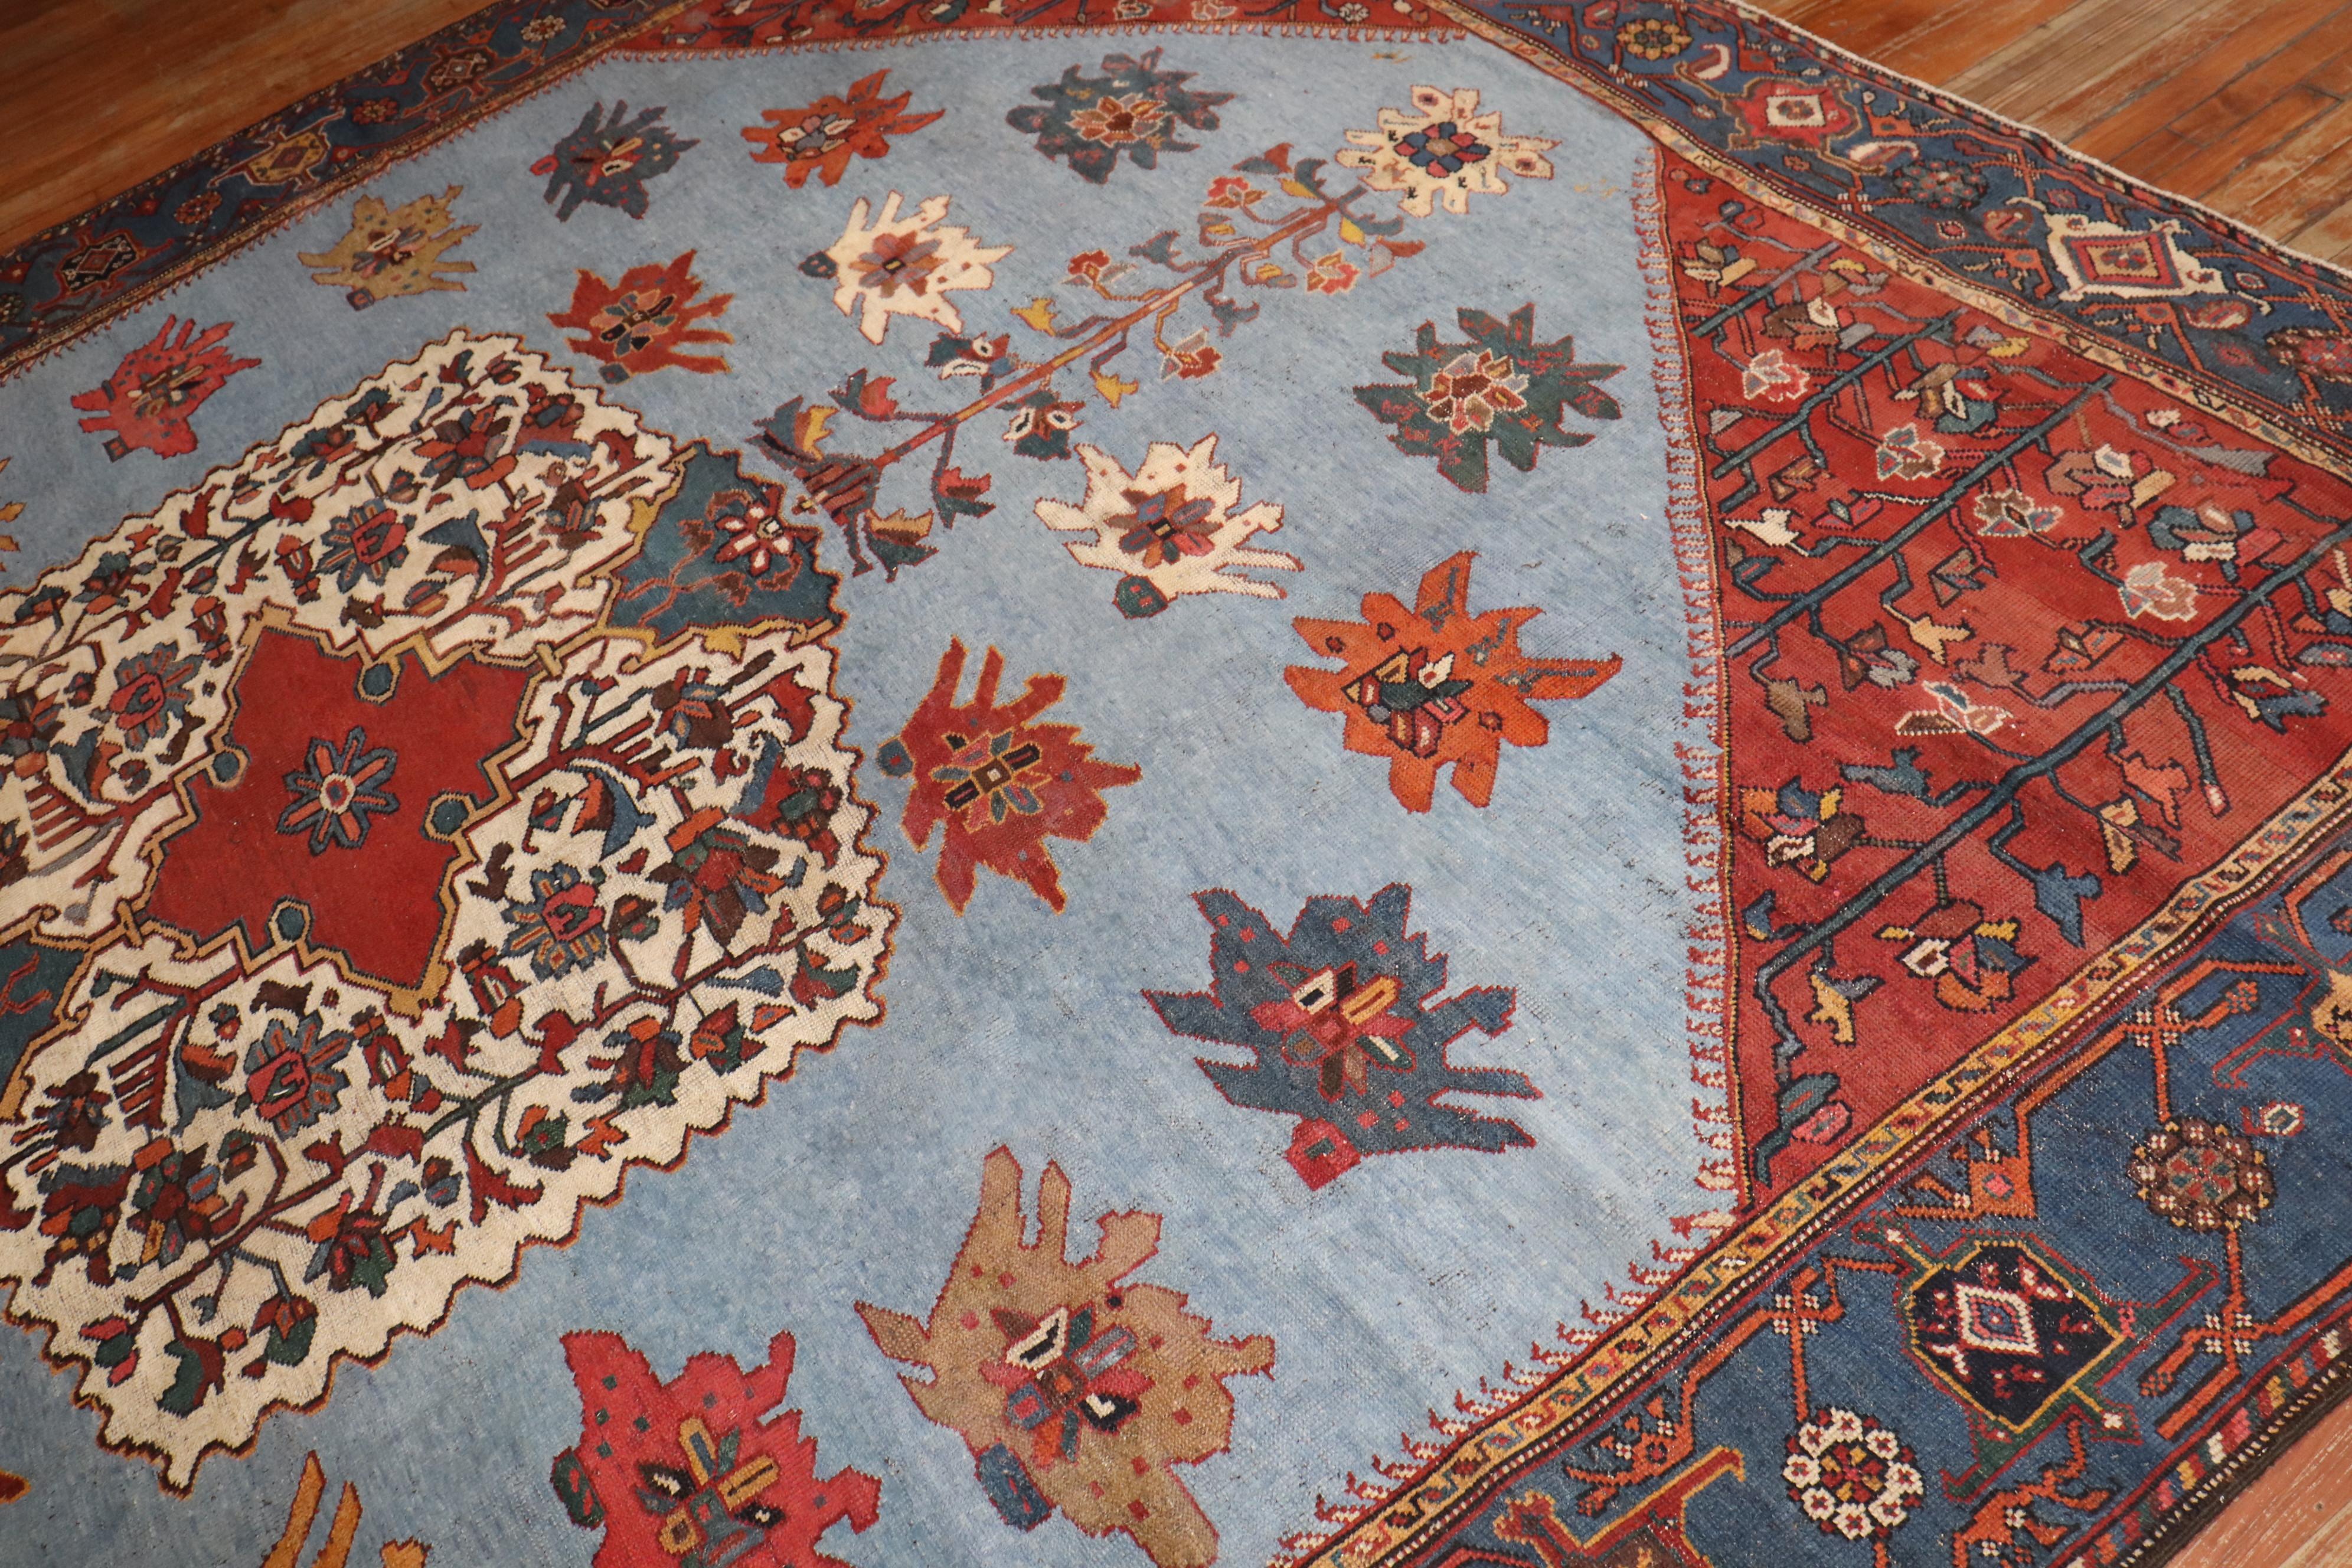 Zabihi Collection Dramatic Room Size Square Antique Persian Bakhtiari Rug For Sale 8